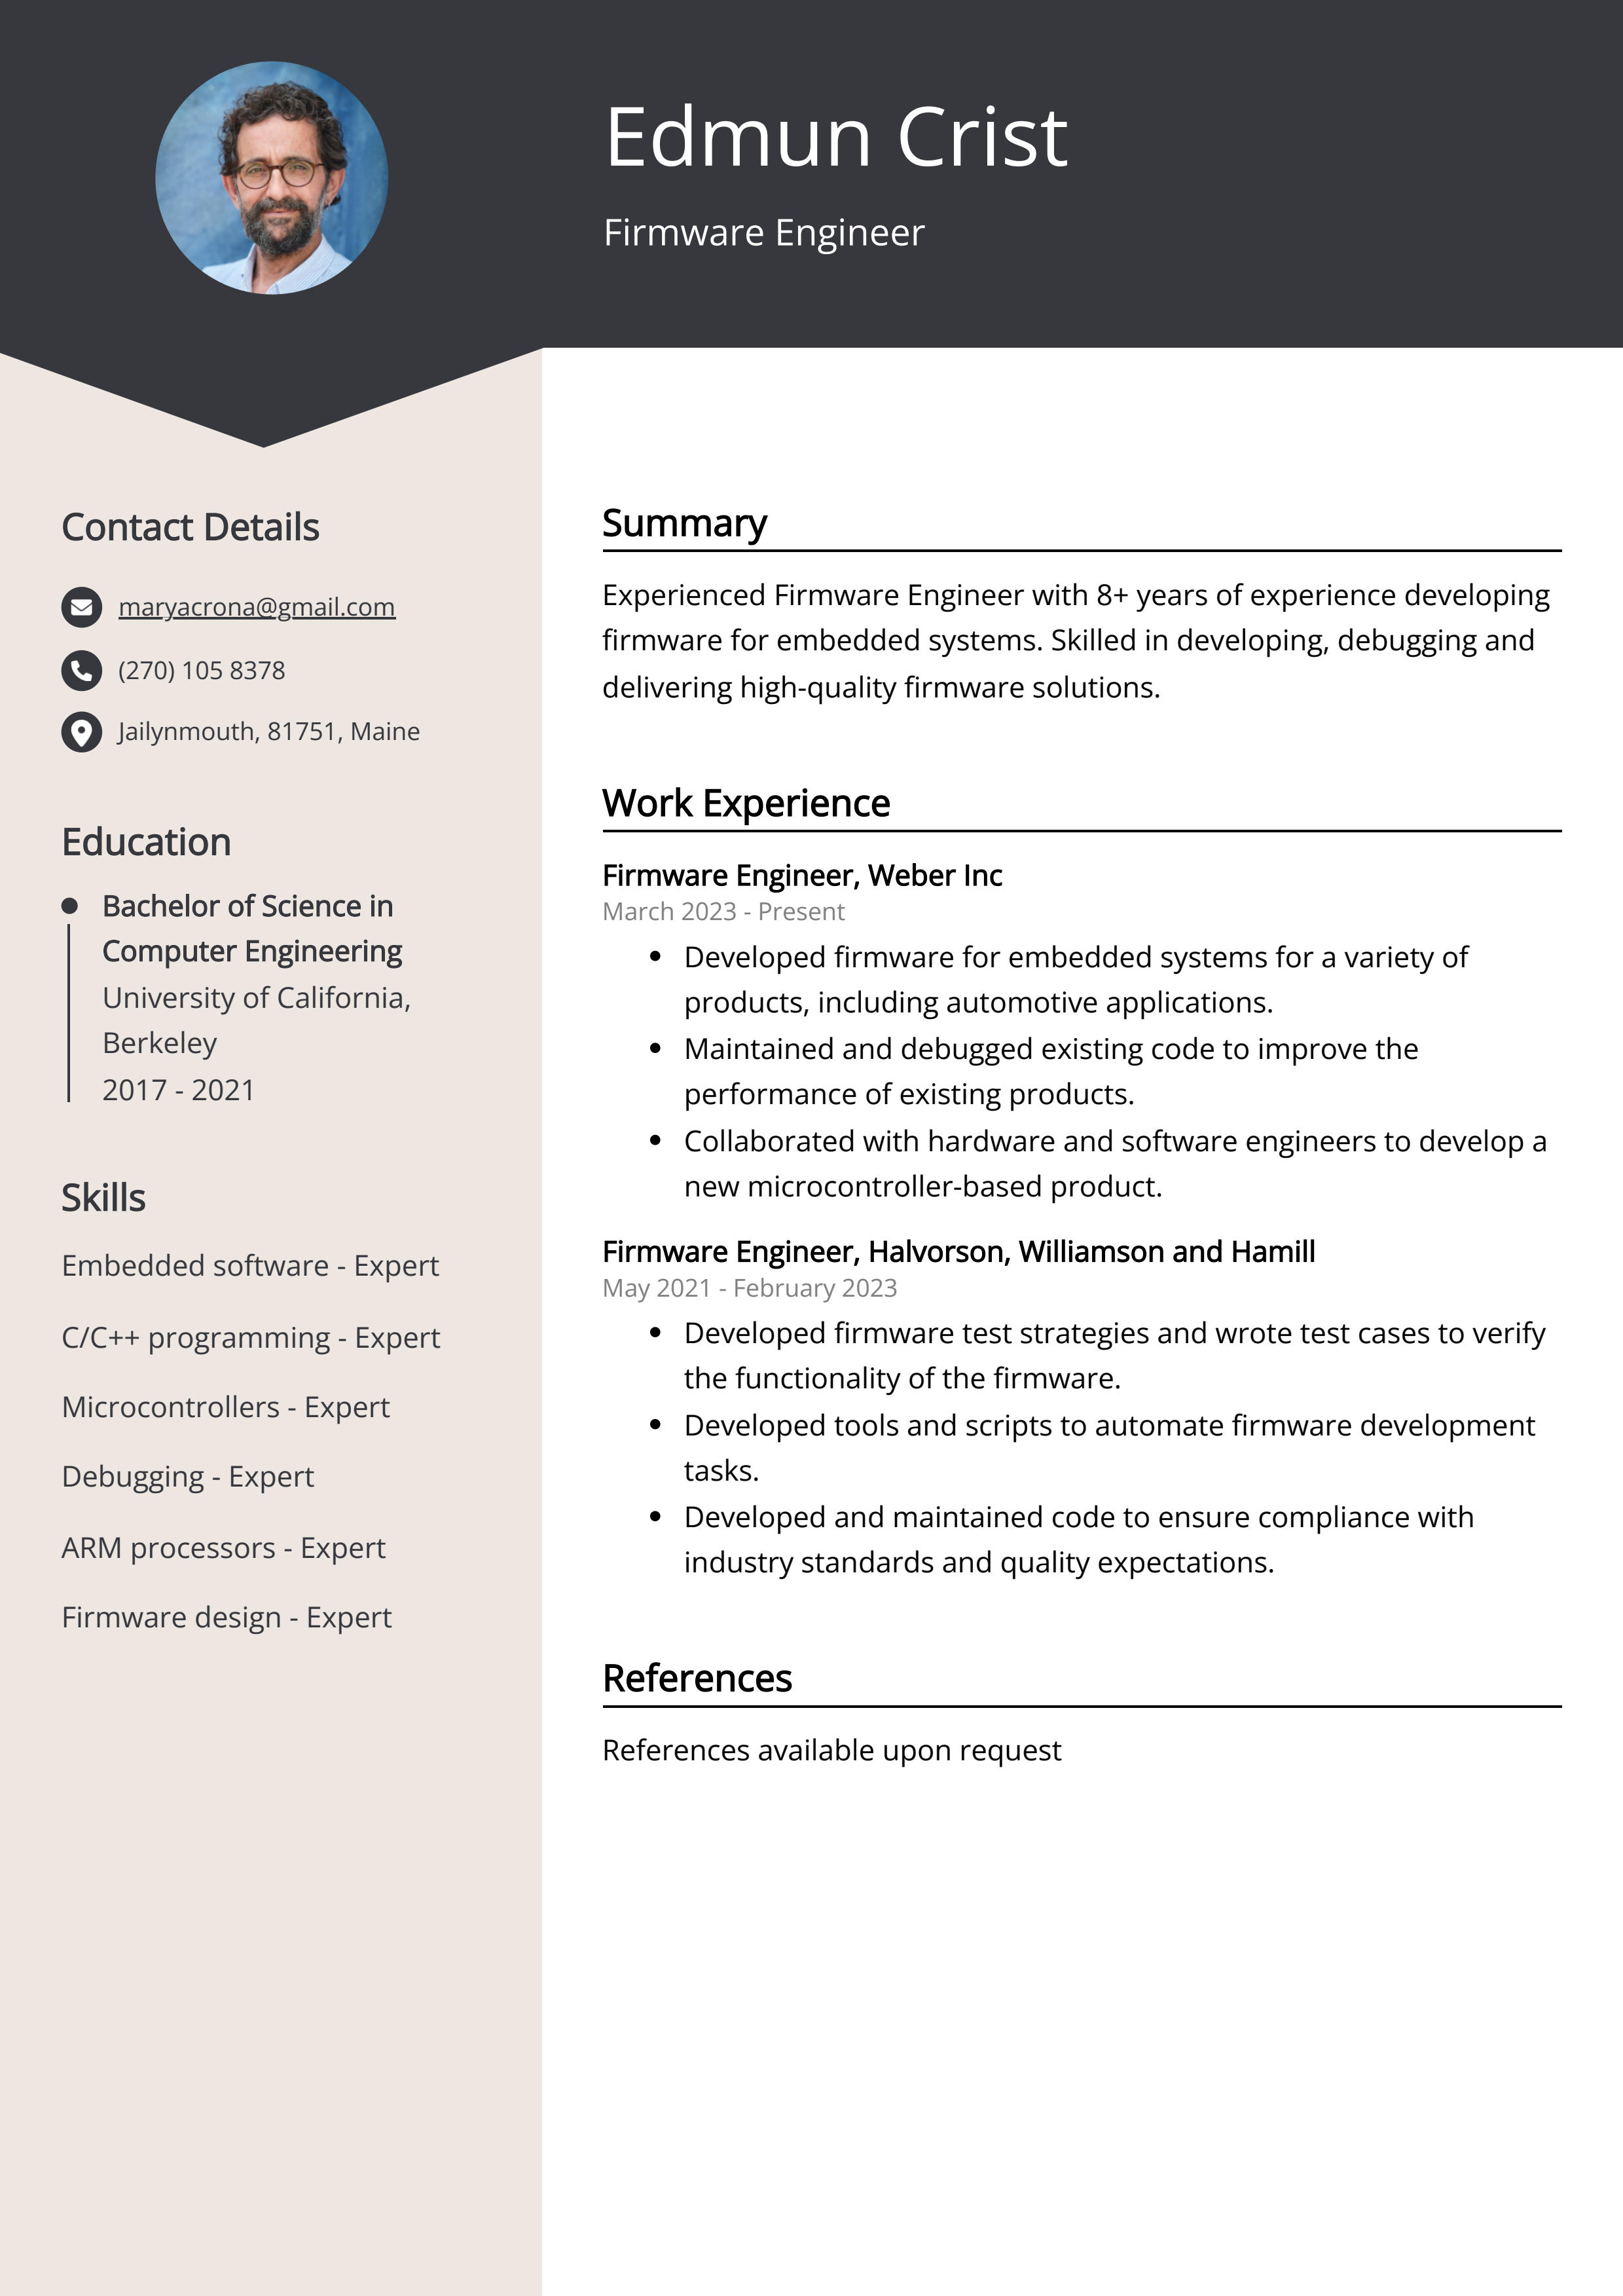 Firmware Engineer CV Example